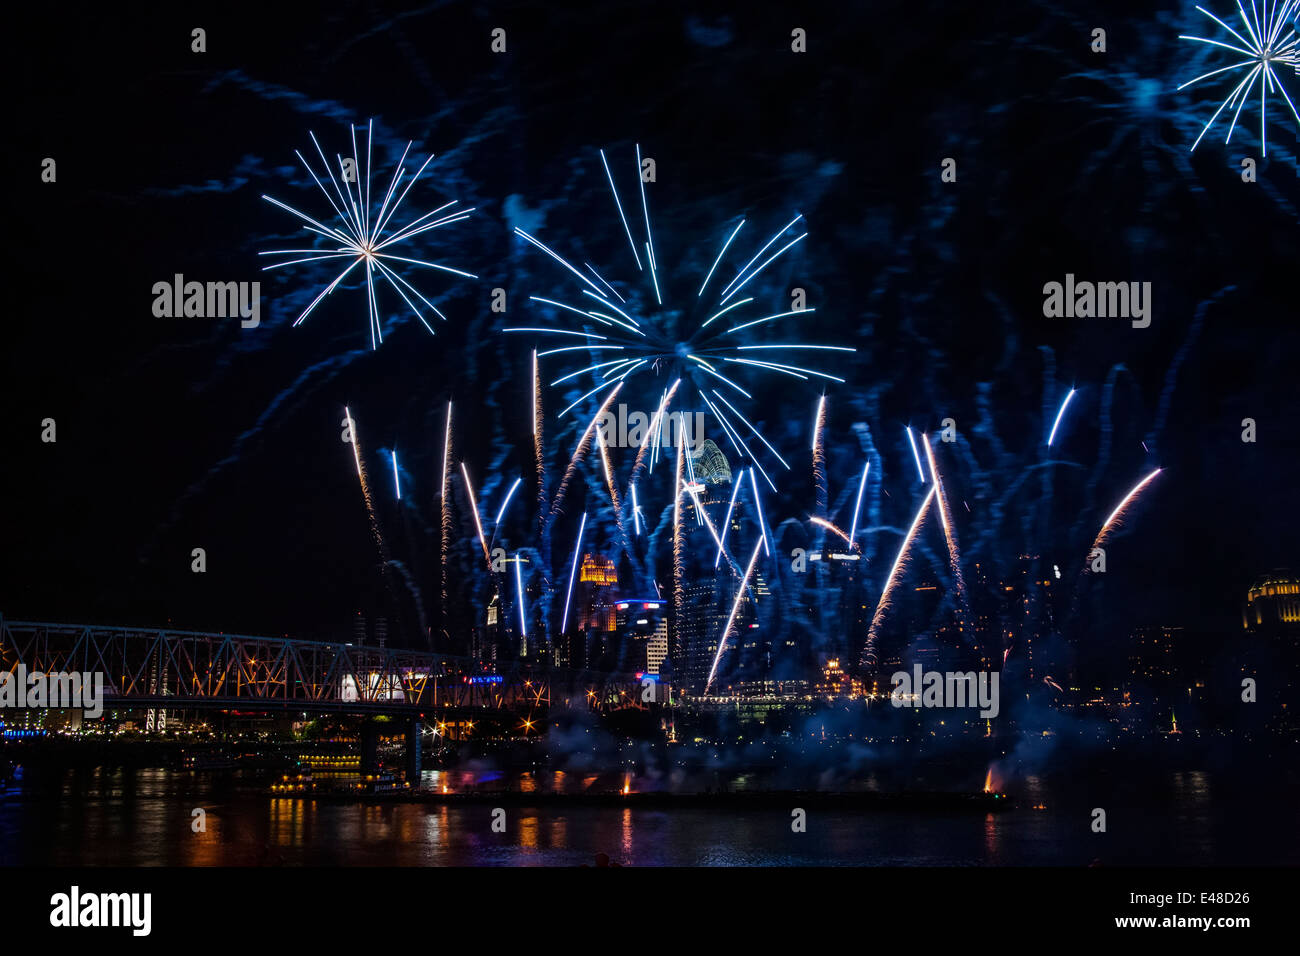 Fireworks Bursting Over The City Of Cincinnati And The Ohio River, Cincinnati Ohio, USA Stock Photo